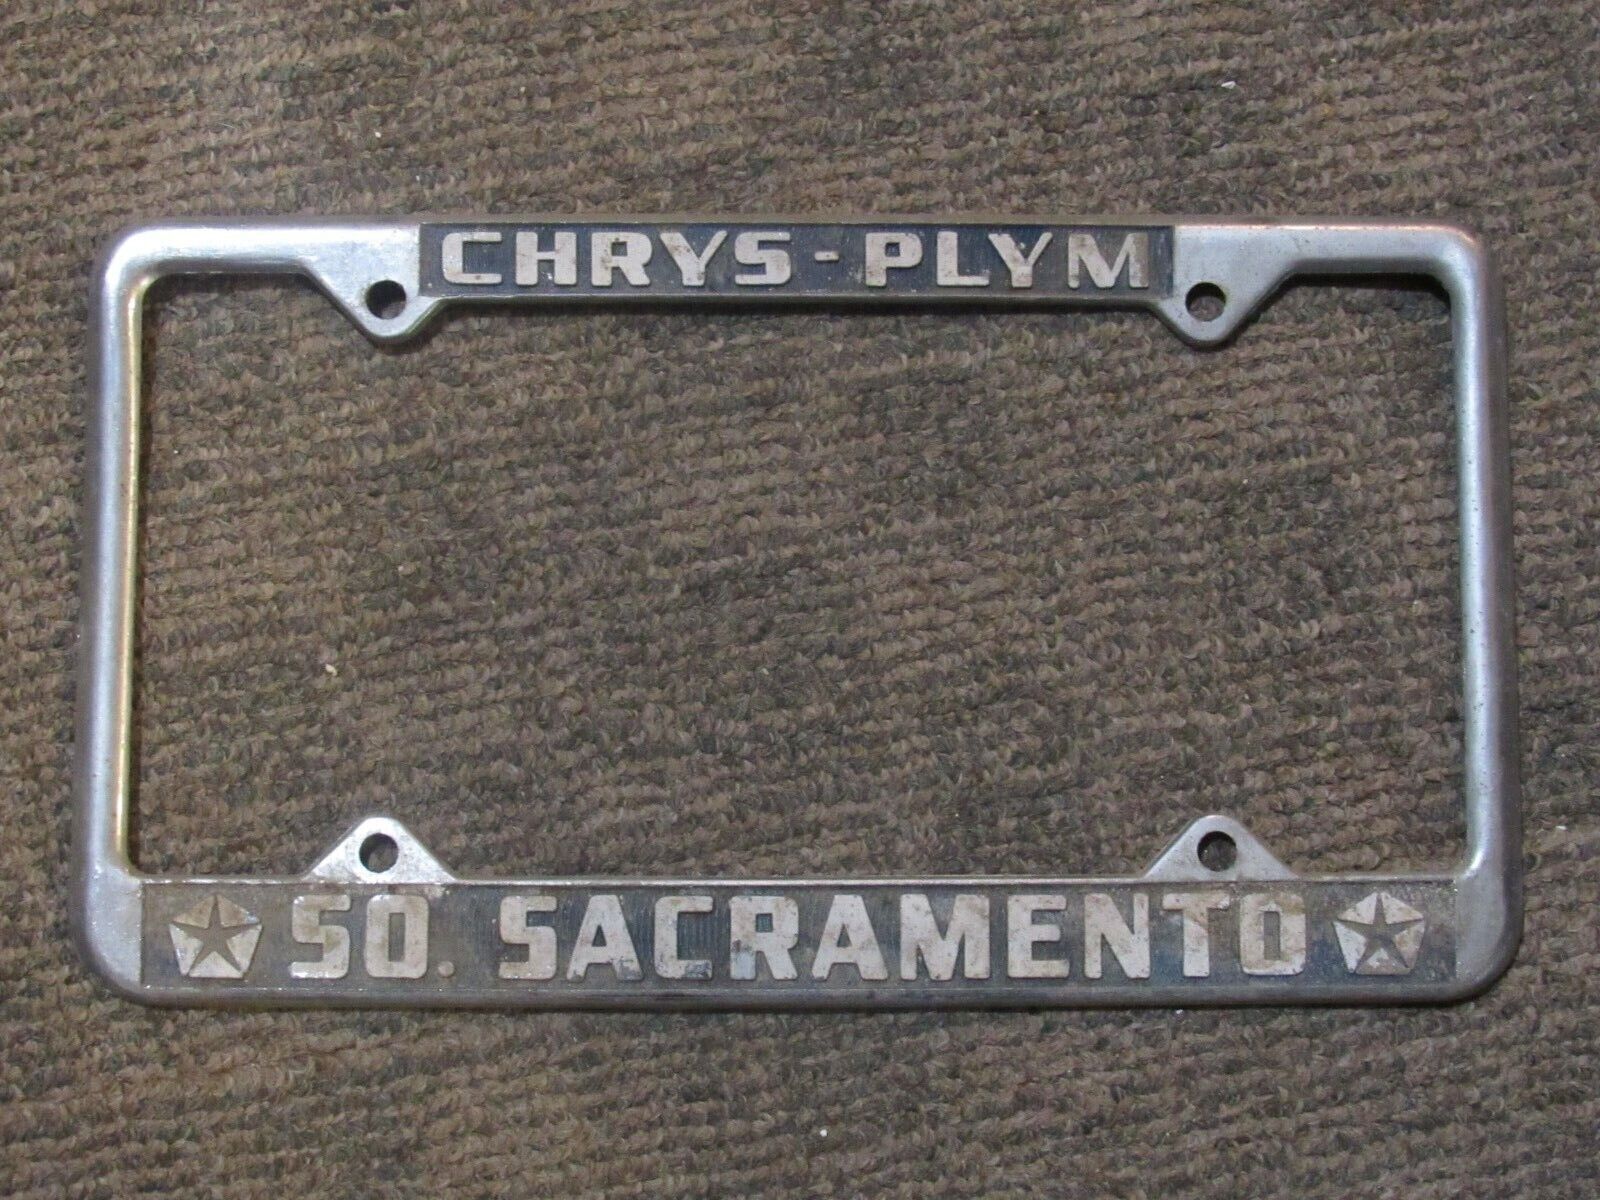 Vintage So. Sacramento Chrysler Plymouth Metal License Plate Frame Embossed Rare